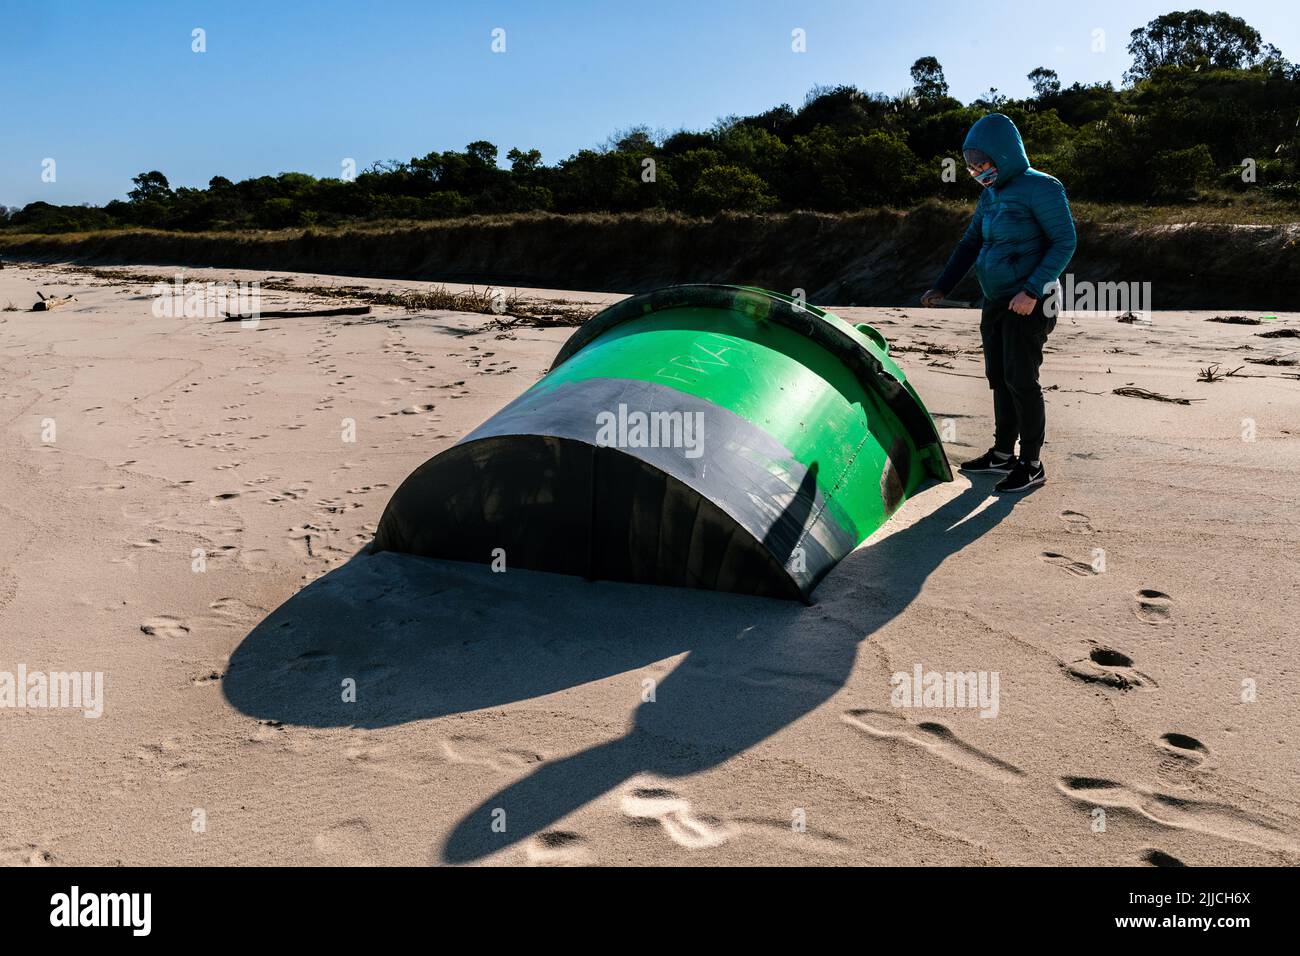 Woman standing next to a green signaling beacon that ran aground on the beach, Kiyu, San José, Uruguay Stock Photo